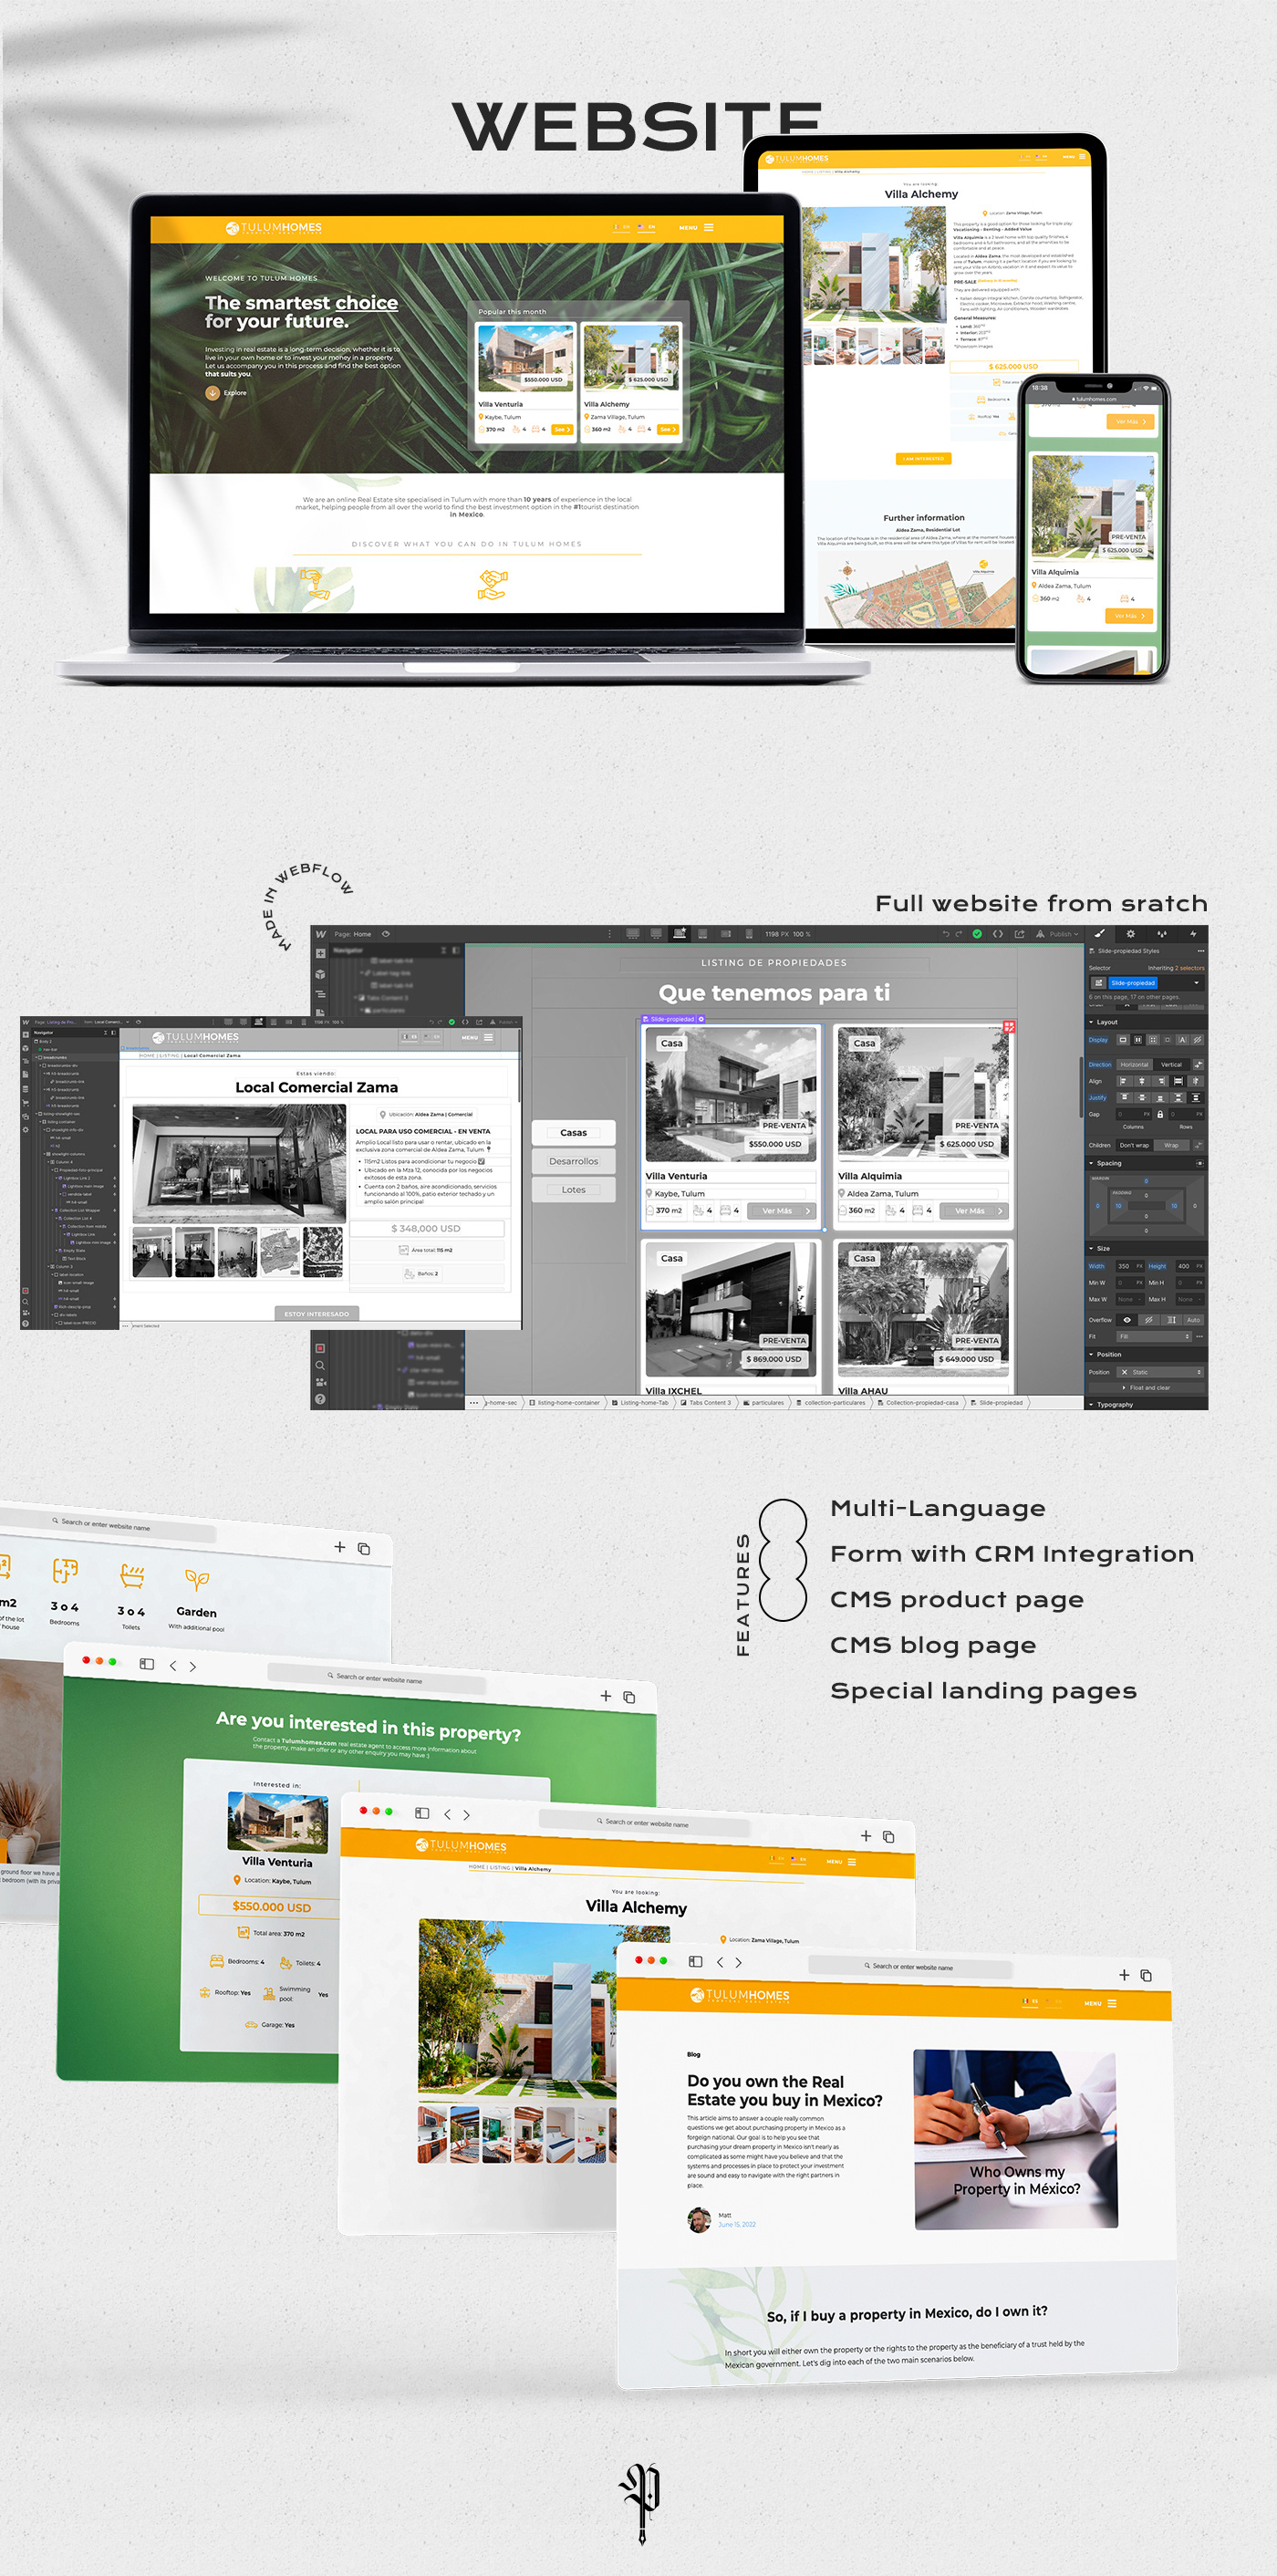 brand identity design gráfico landing page marketing   real estate sales kit Social media post Socialmedia Web Design  Webflow